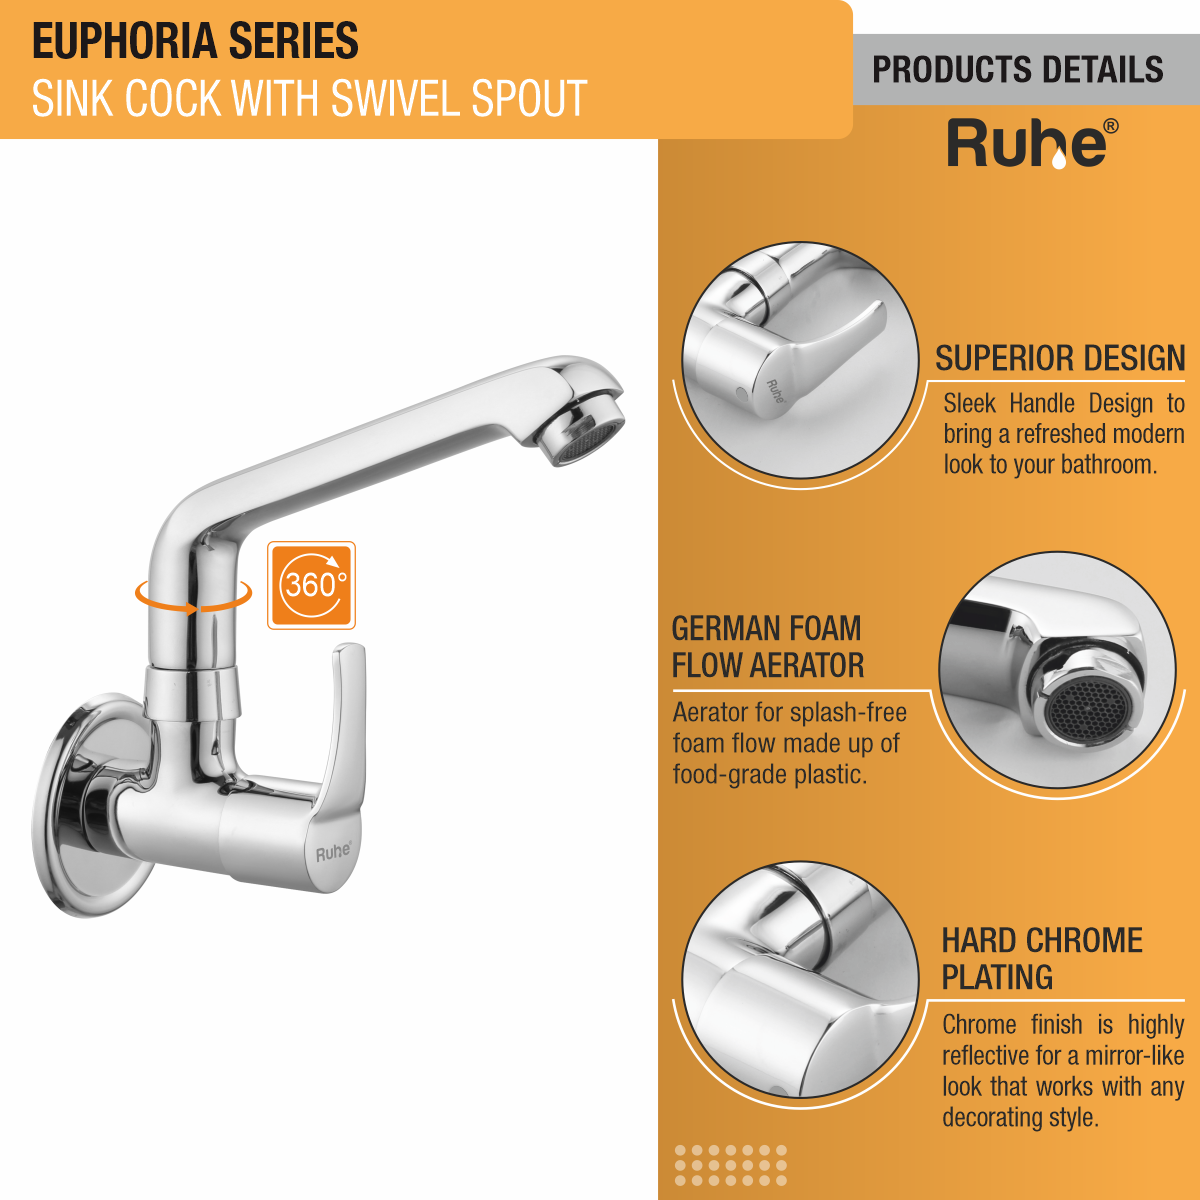 Euphoria Sink Tap With Swivel Spout Faucet product details